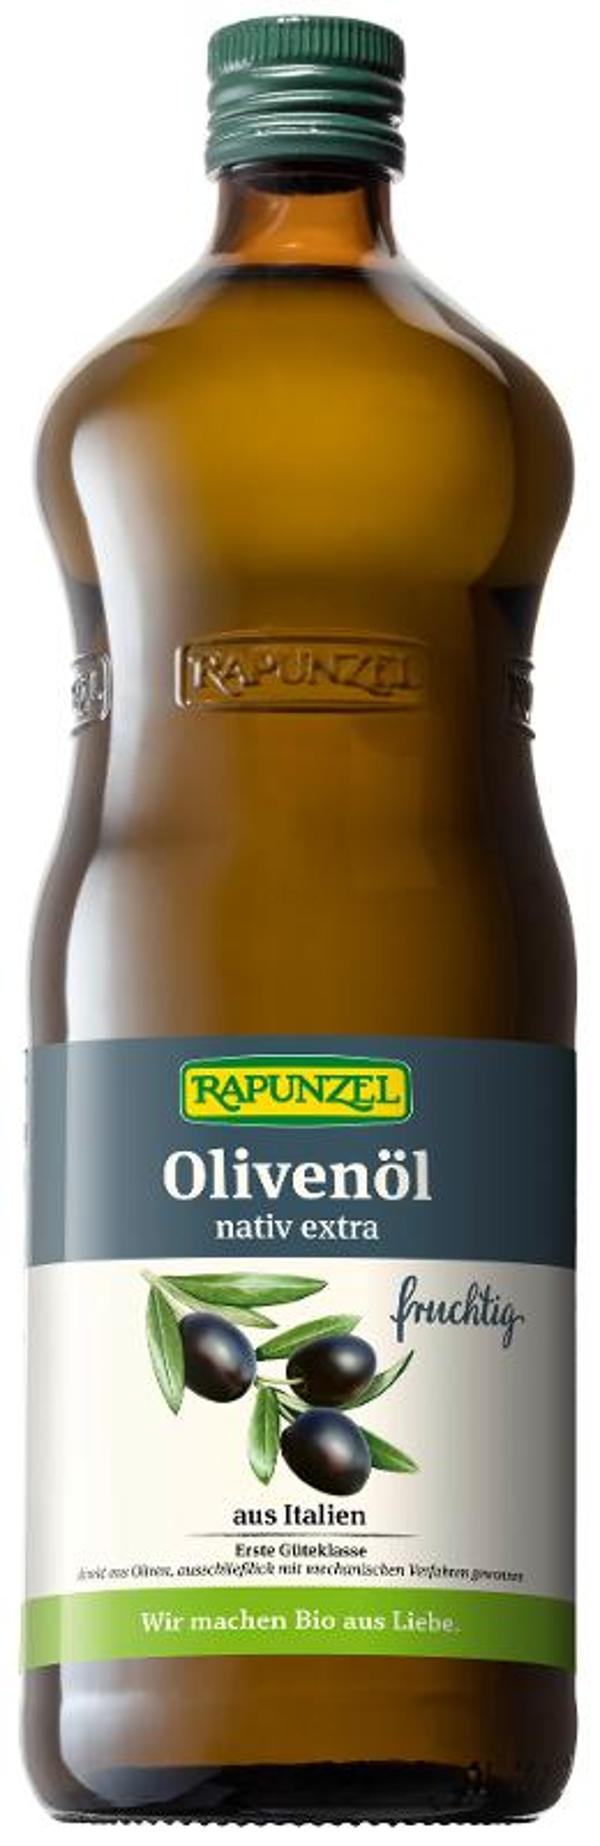 Produktfoto zu Olivenöl fruchtig 1l